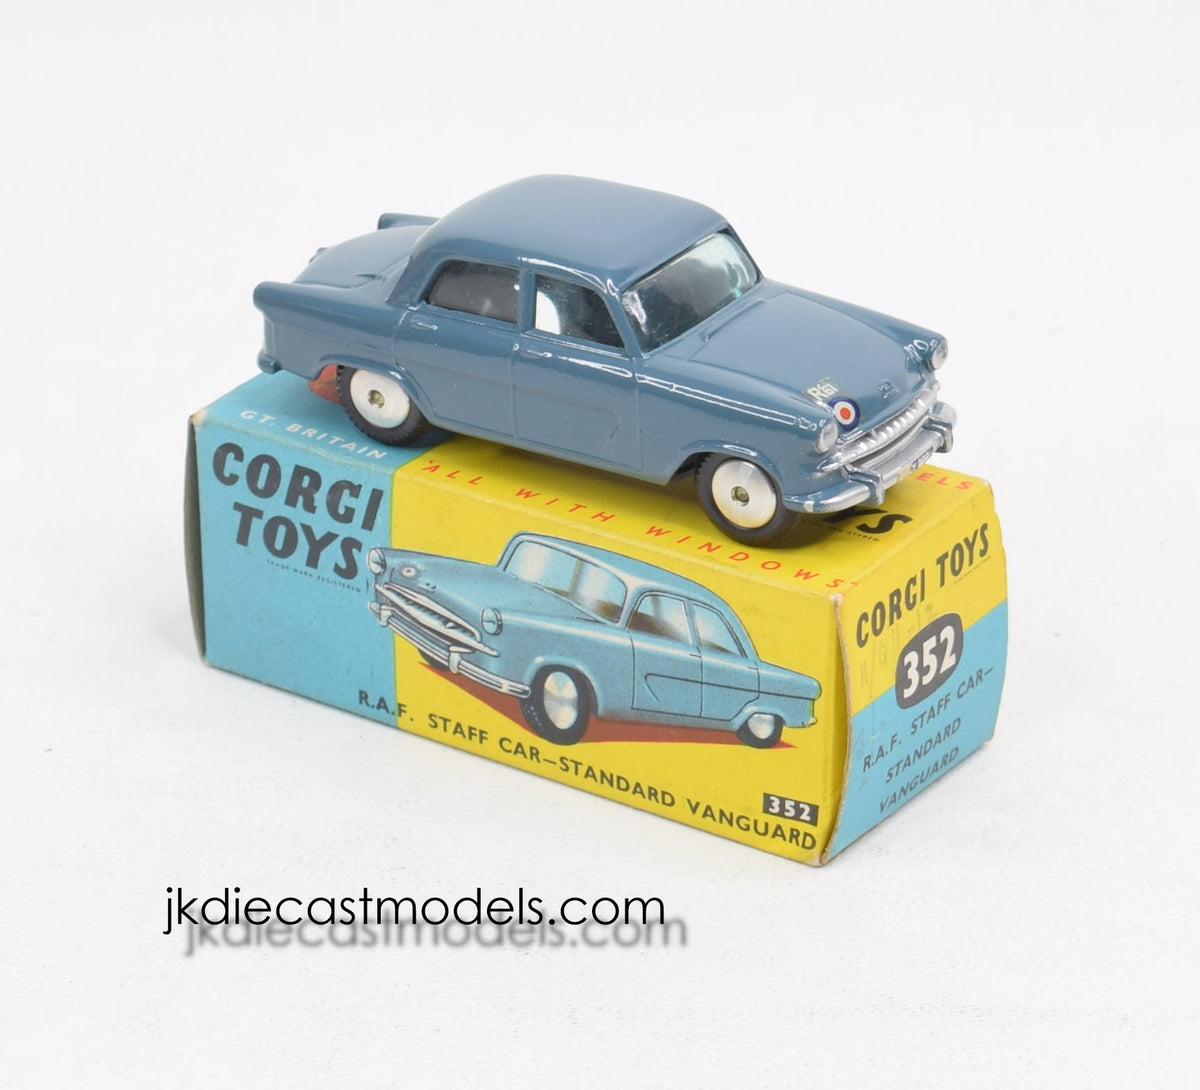 Corgi toy 352 R.A.F Staff car Virtually Mint/Nice box ''Swansea Collection''